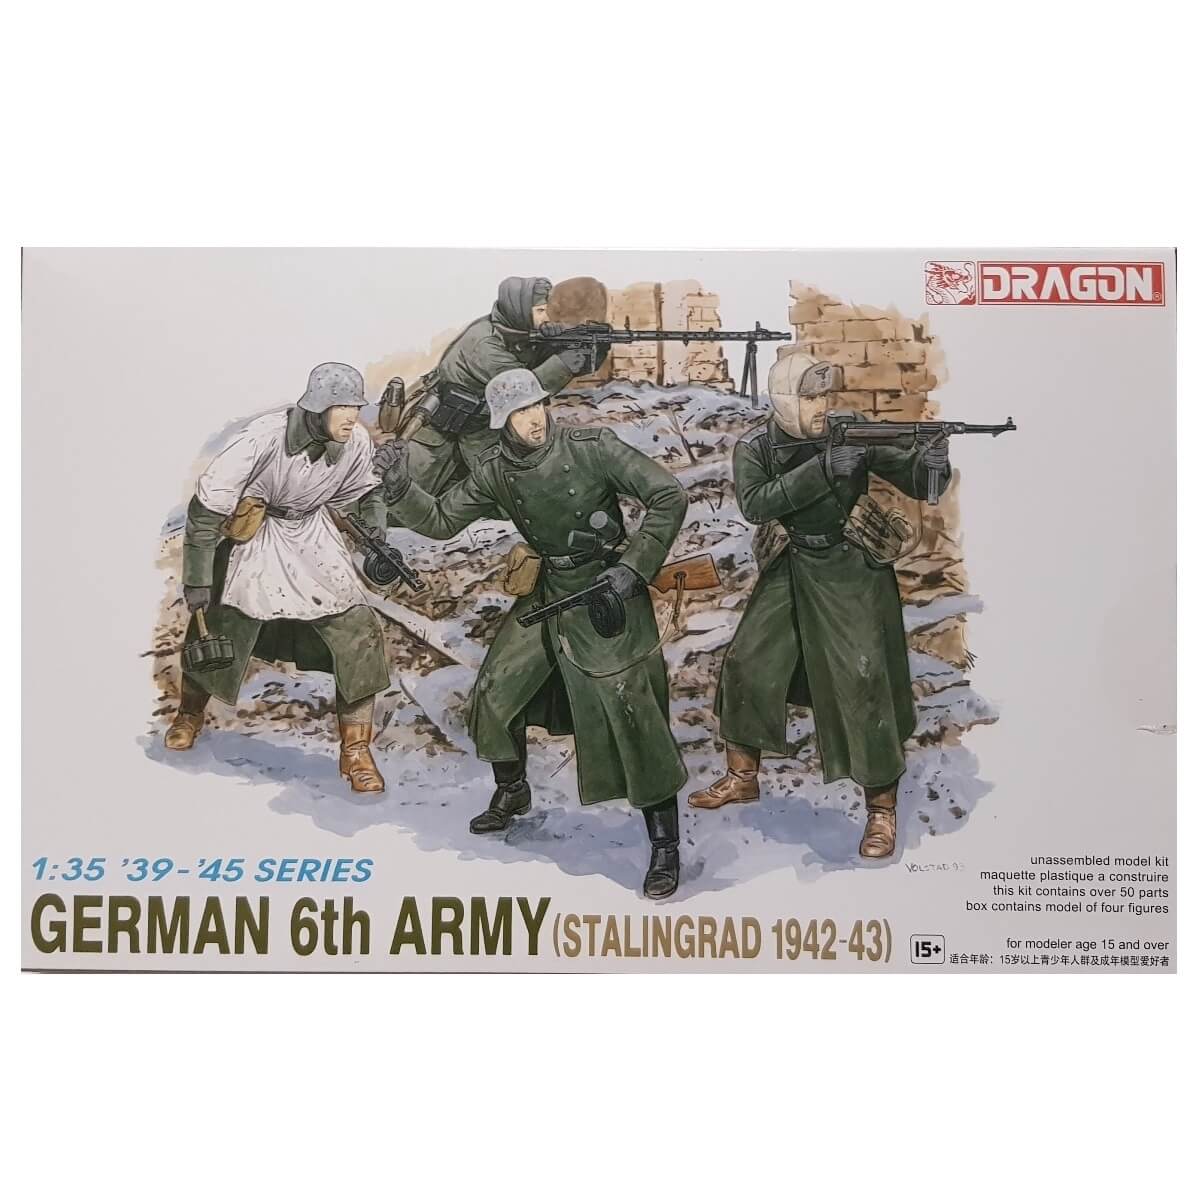 1:35 German 6th Army - Stalingrad 1942-43 - DRAGON